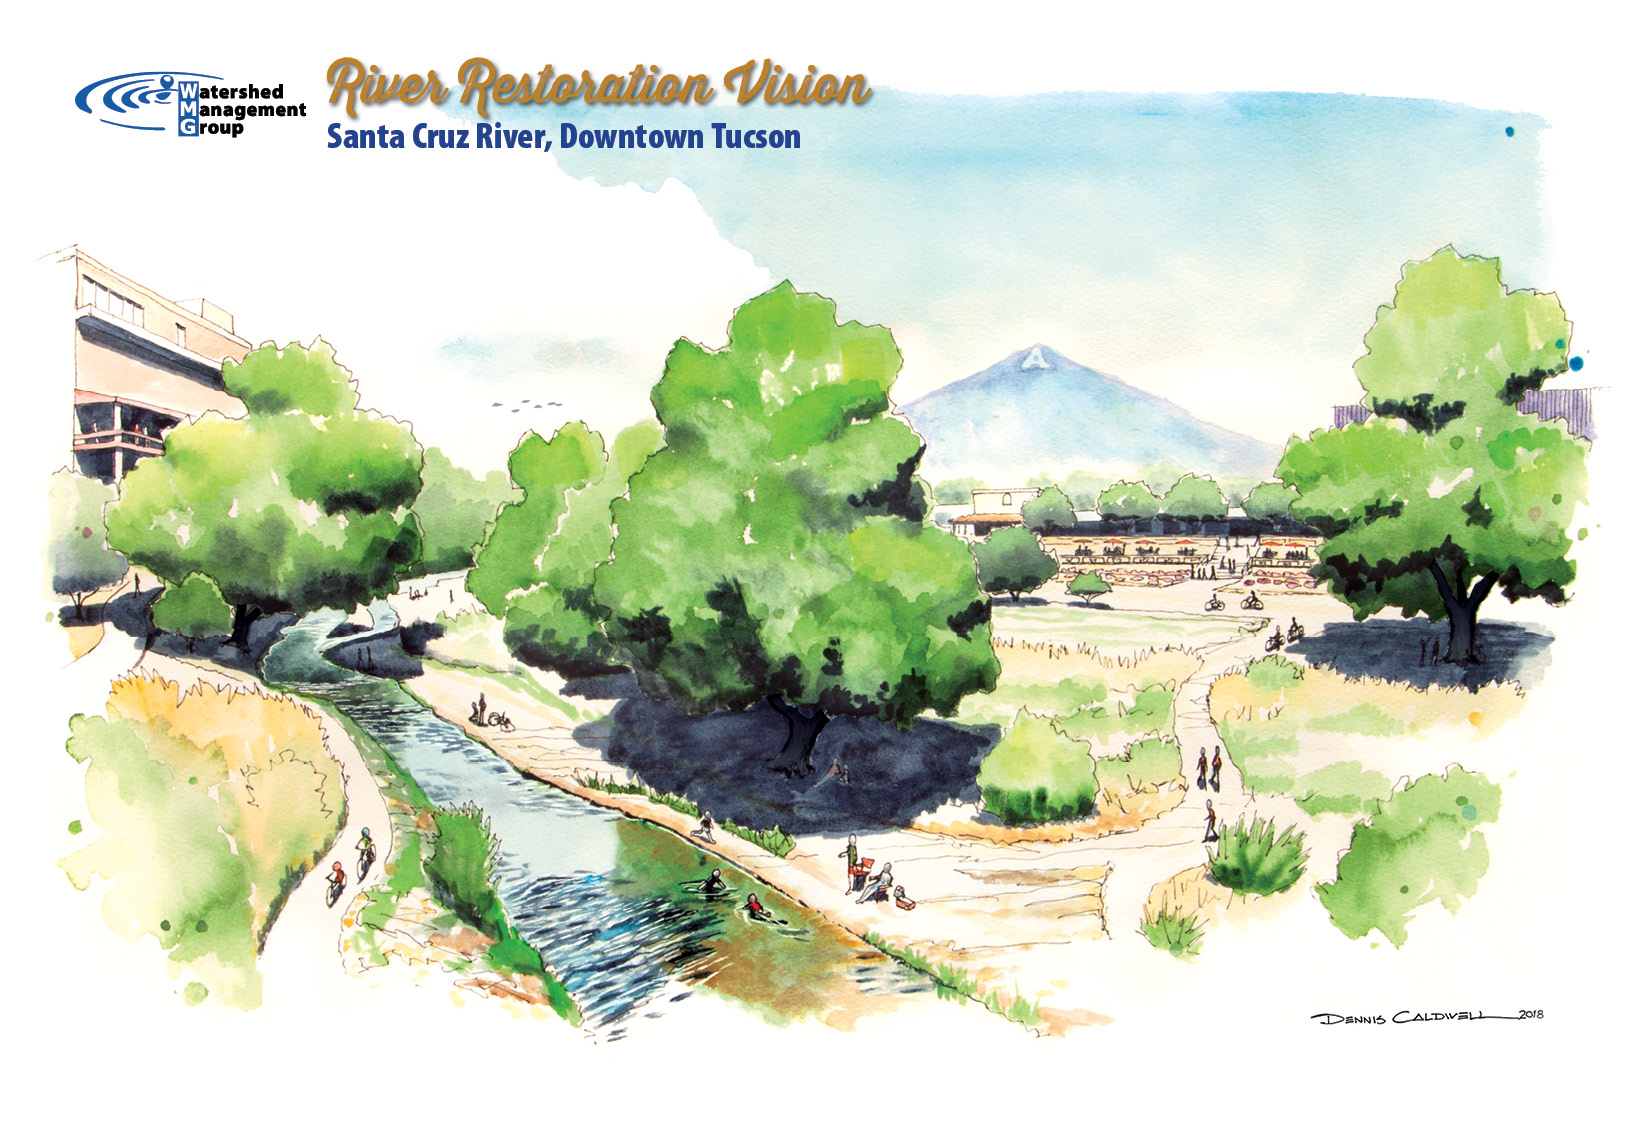 River restoration vision - Santa Cruz River downtown Tucson